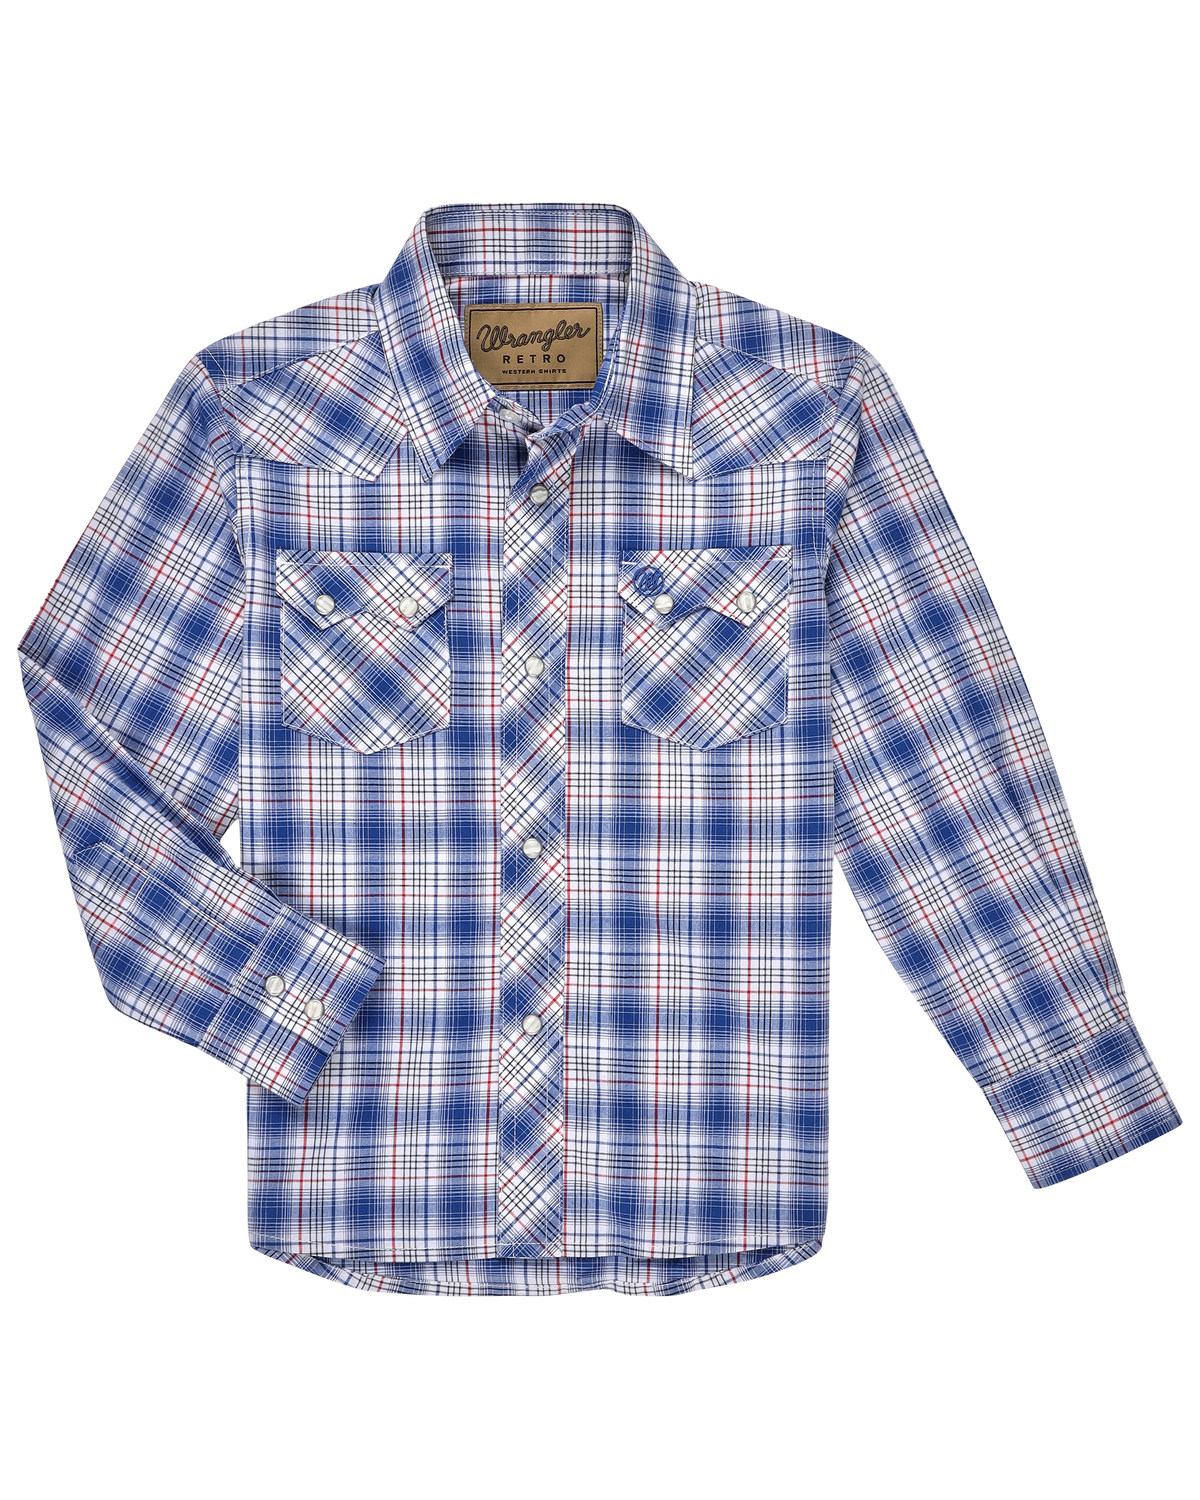 Wrangler Retro Boys' Plaid Print Long Sleeve Western Snap Shirt